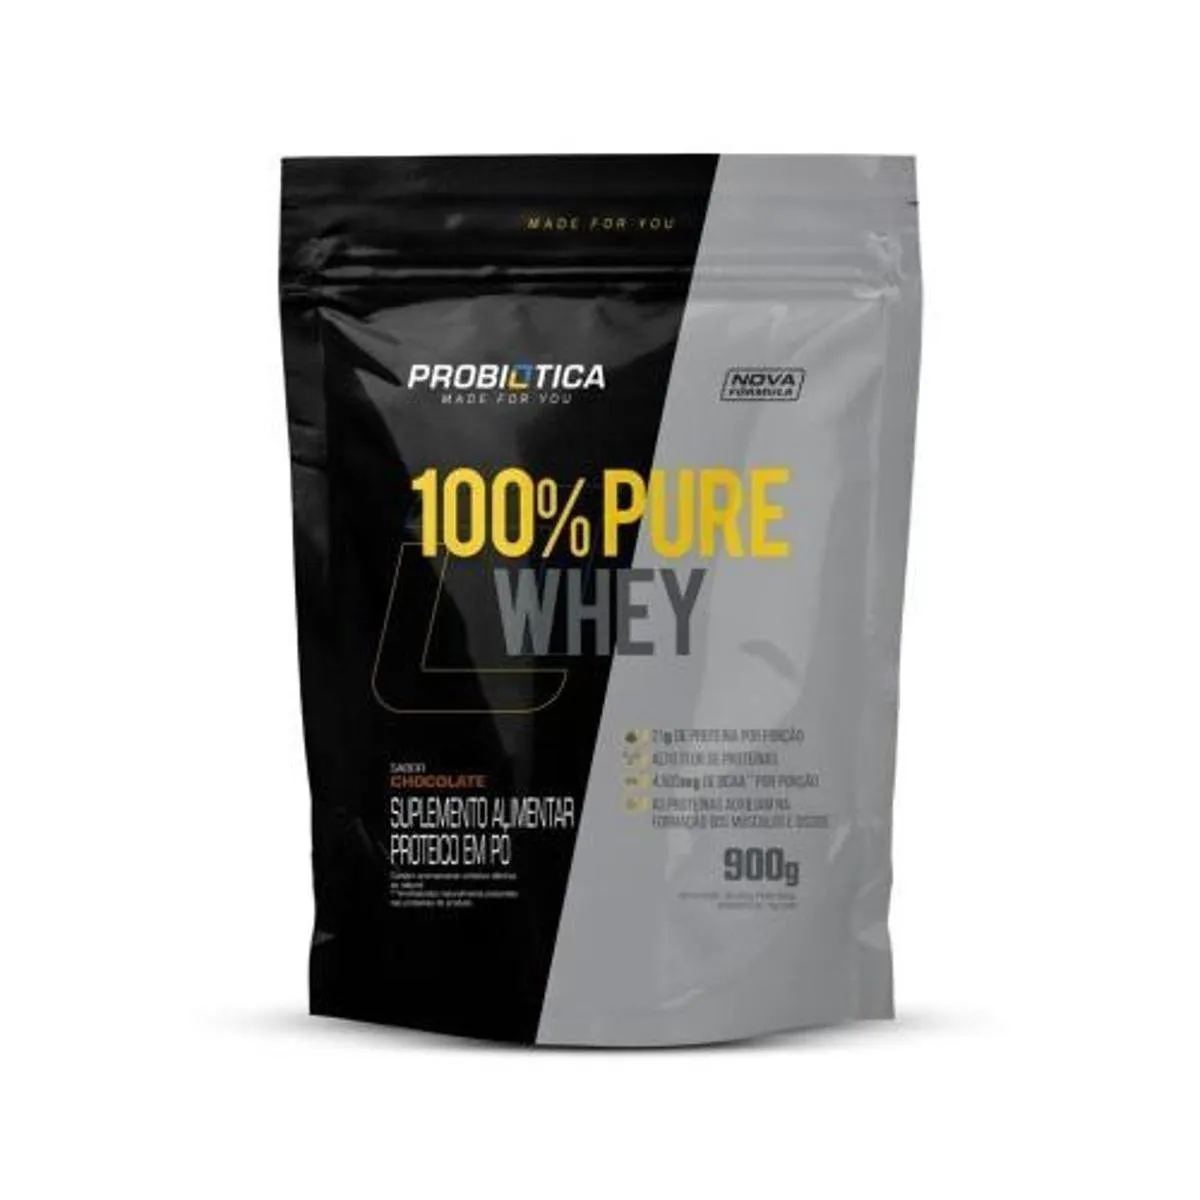 REFIL 100% Pure Whey - Probiotica (900g)